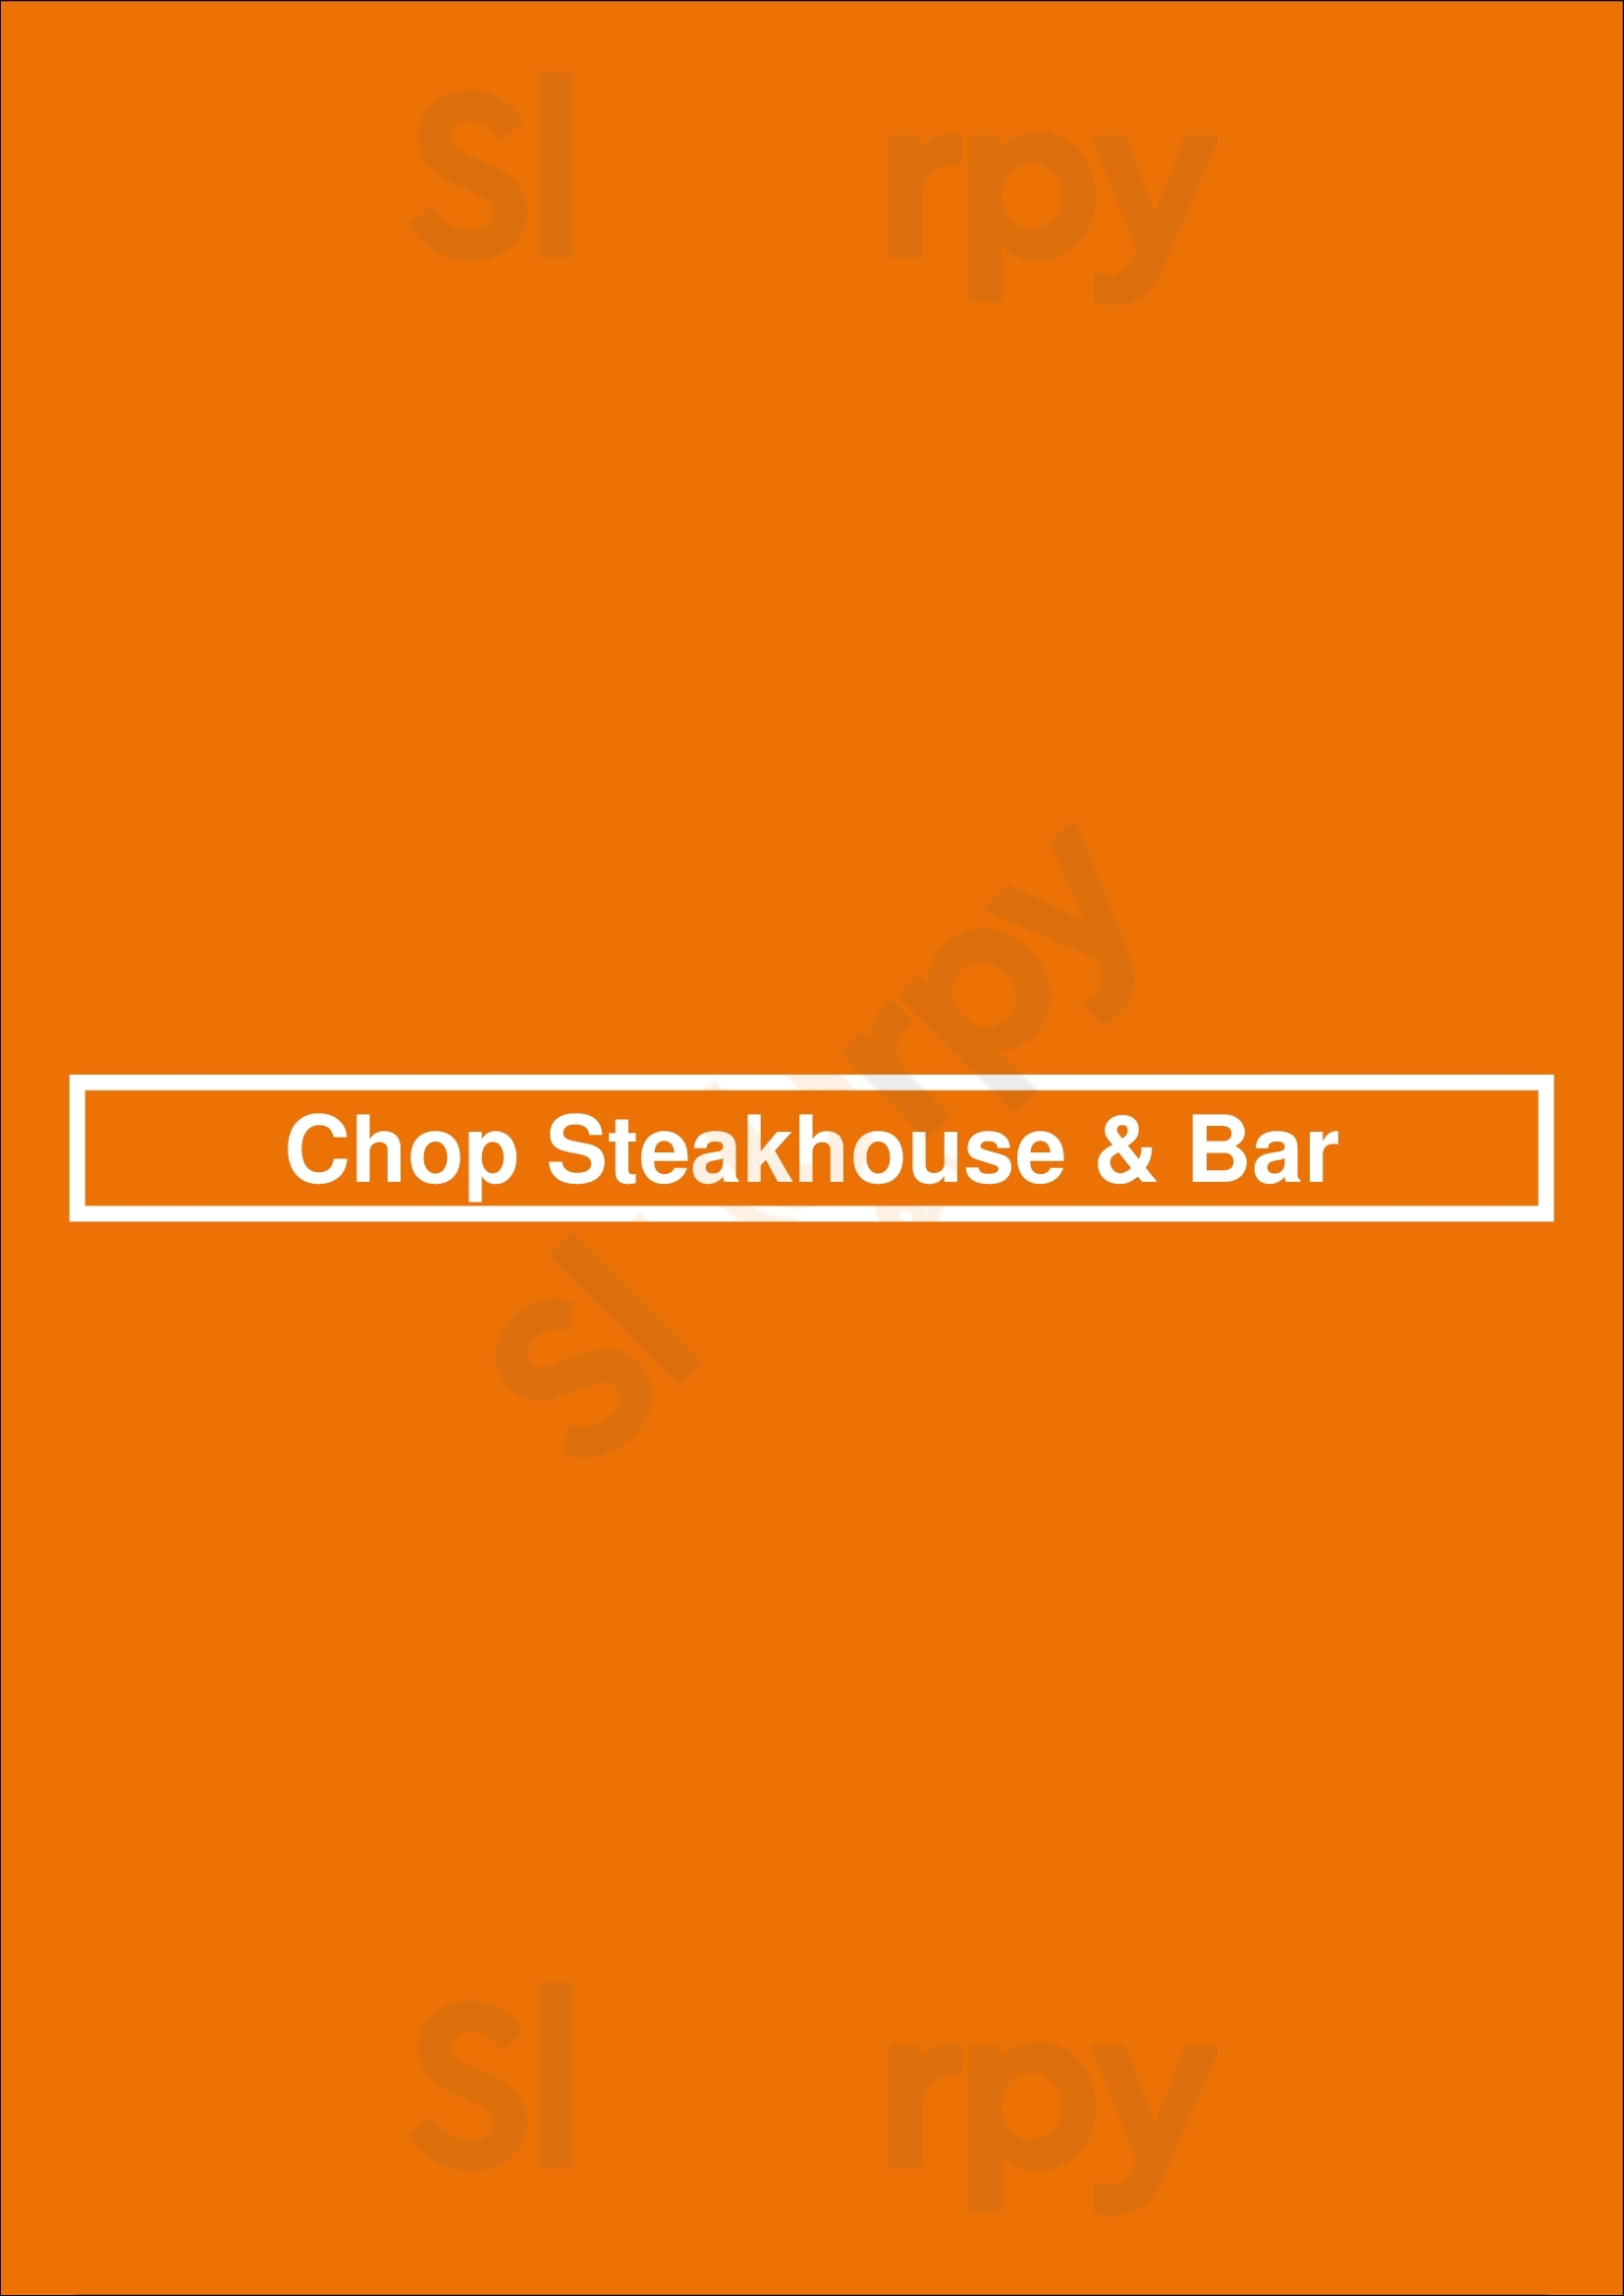 Chop Steakhouse & Bar Calgary Menu - 1